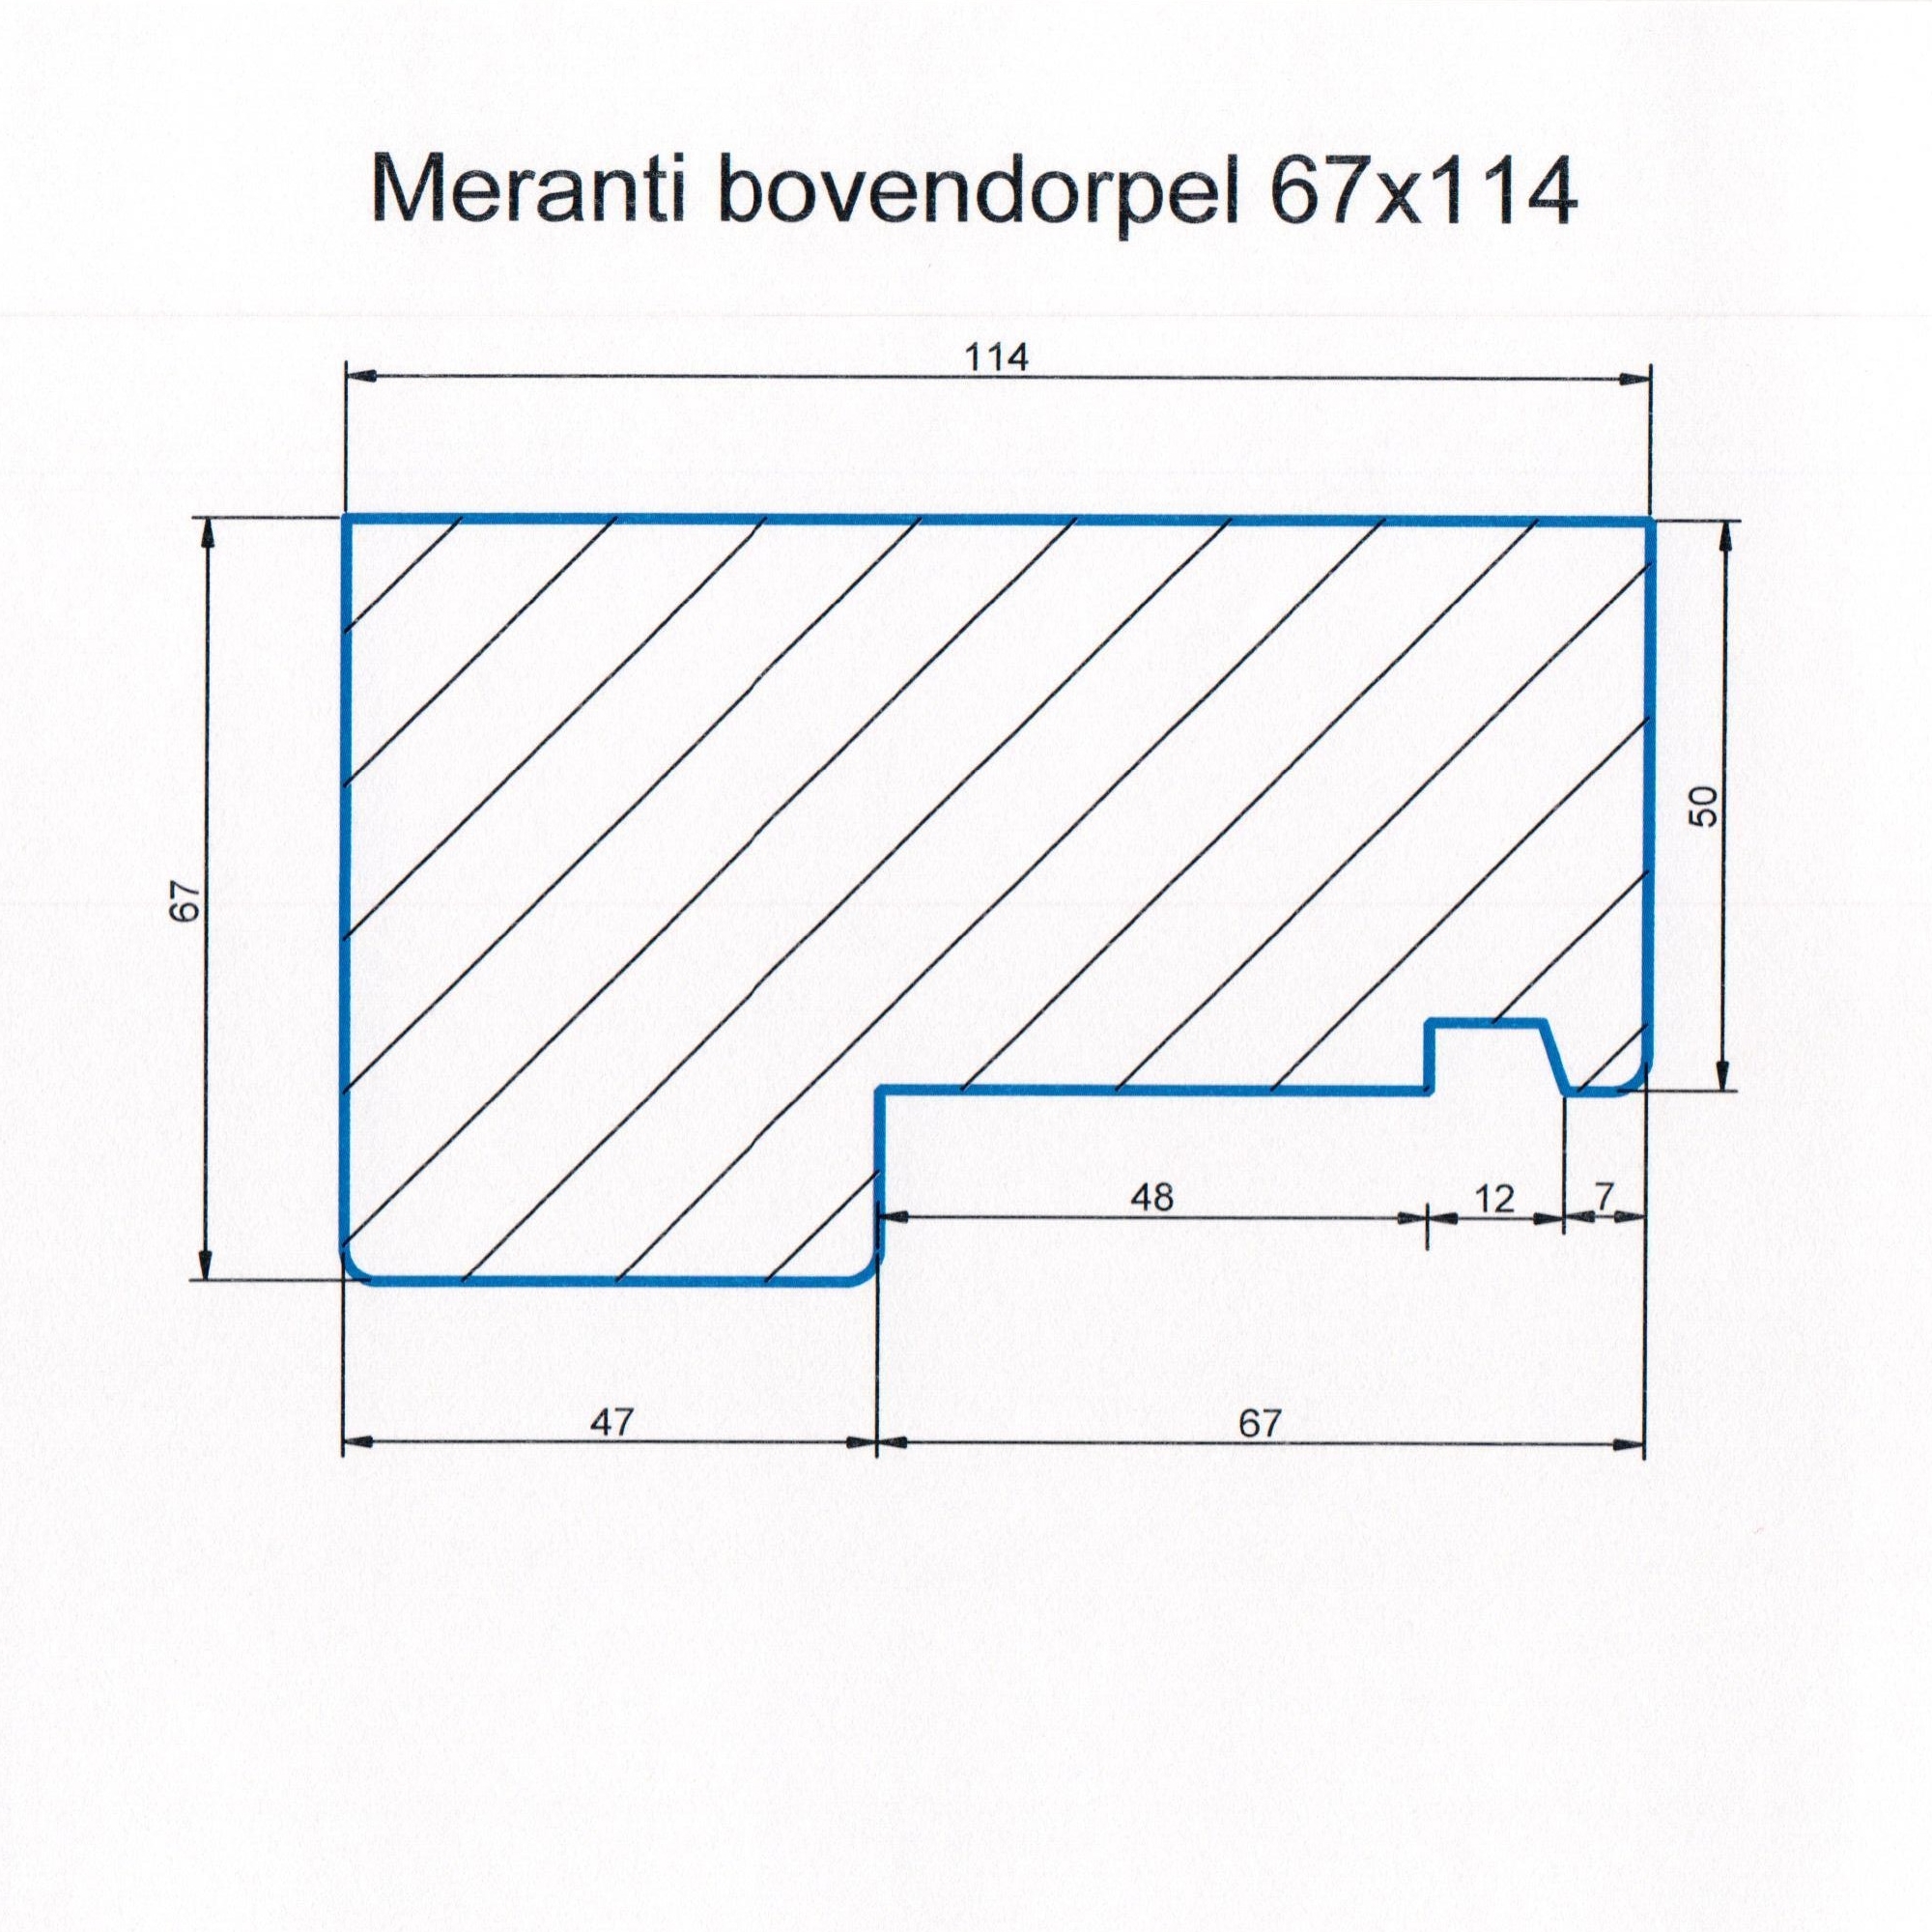 Meranti 67x114 kozijnhout bovendorpel L=3050 mm